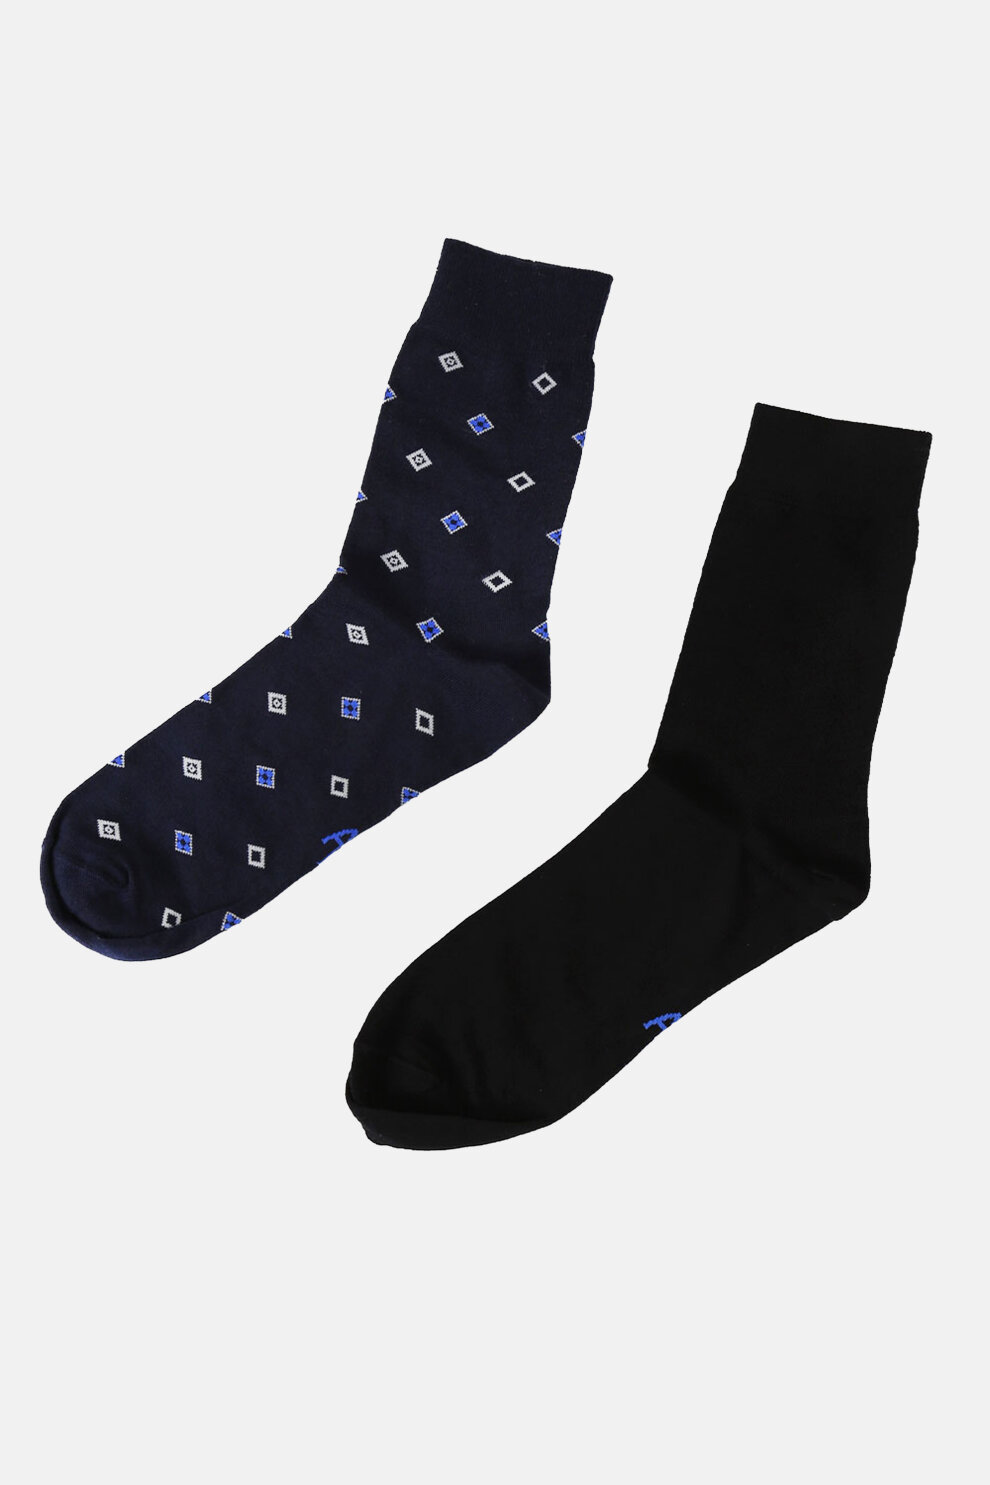 AD twenty čarape